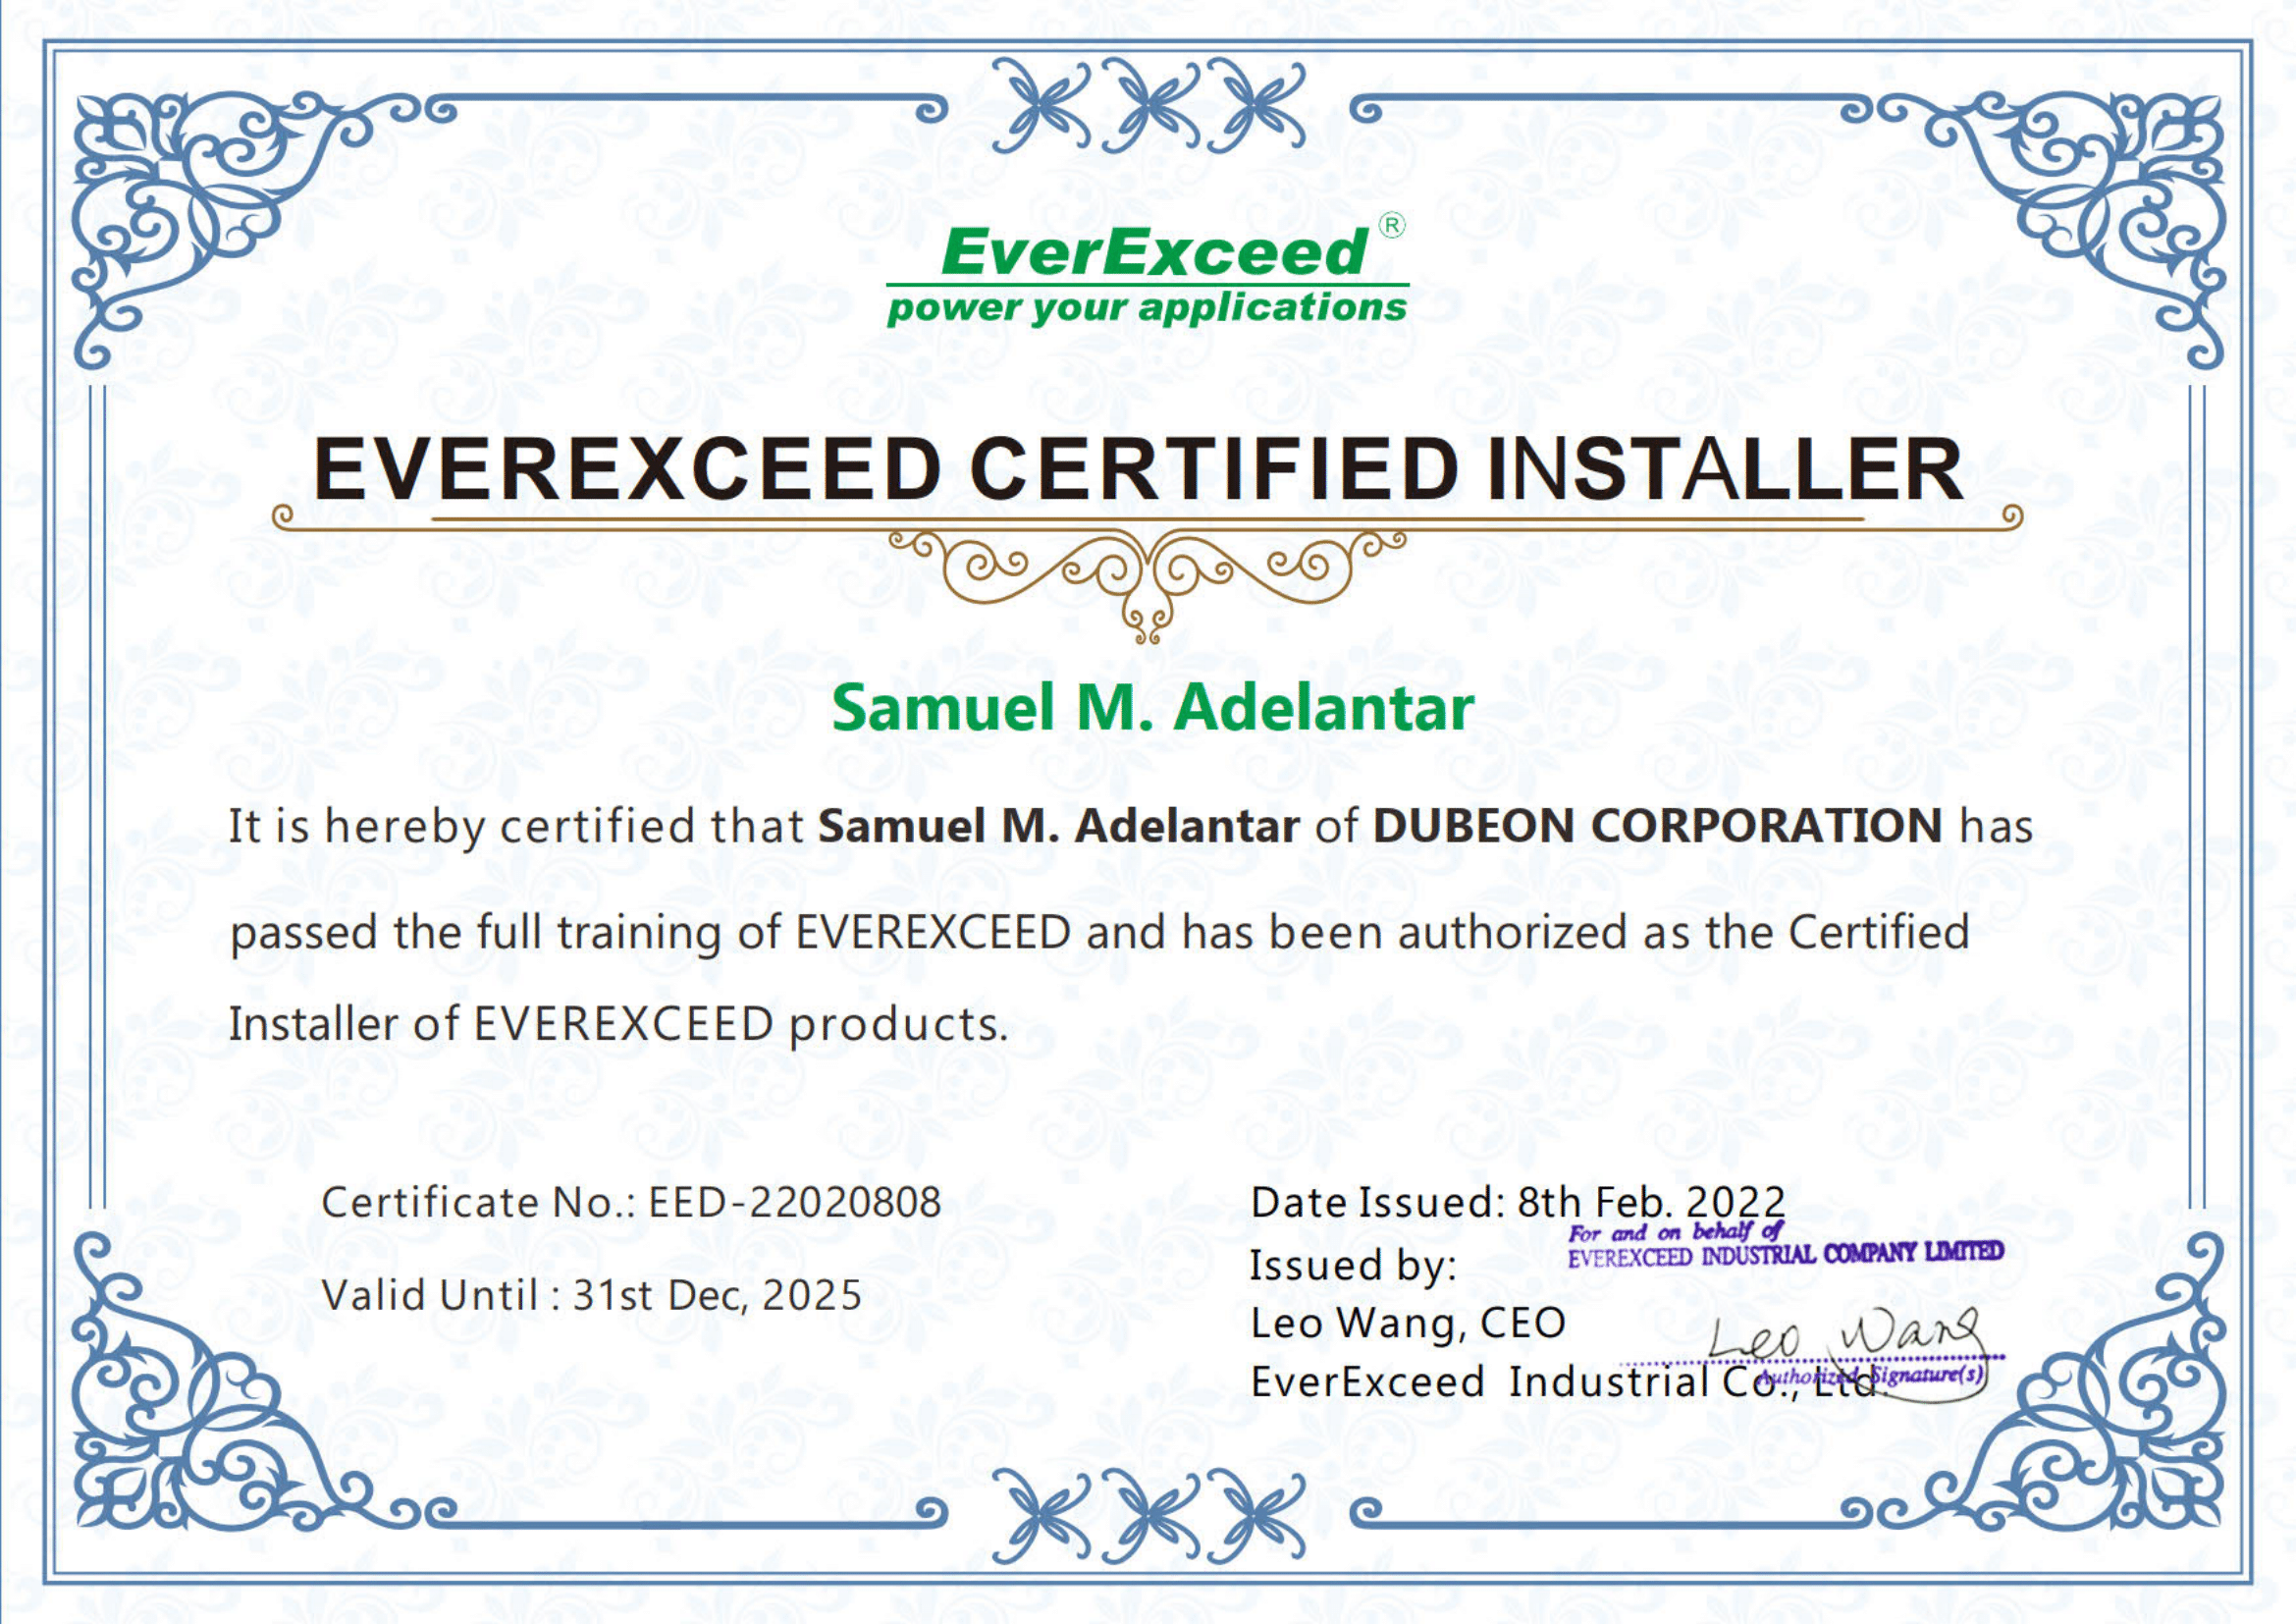 Certified Installer - Dubeon - Samuel M. Adelantar_1-1.png